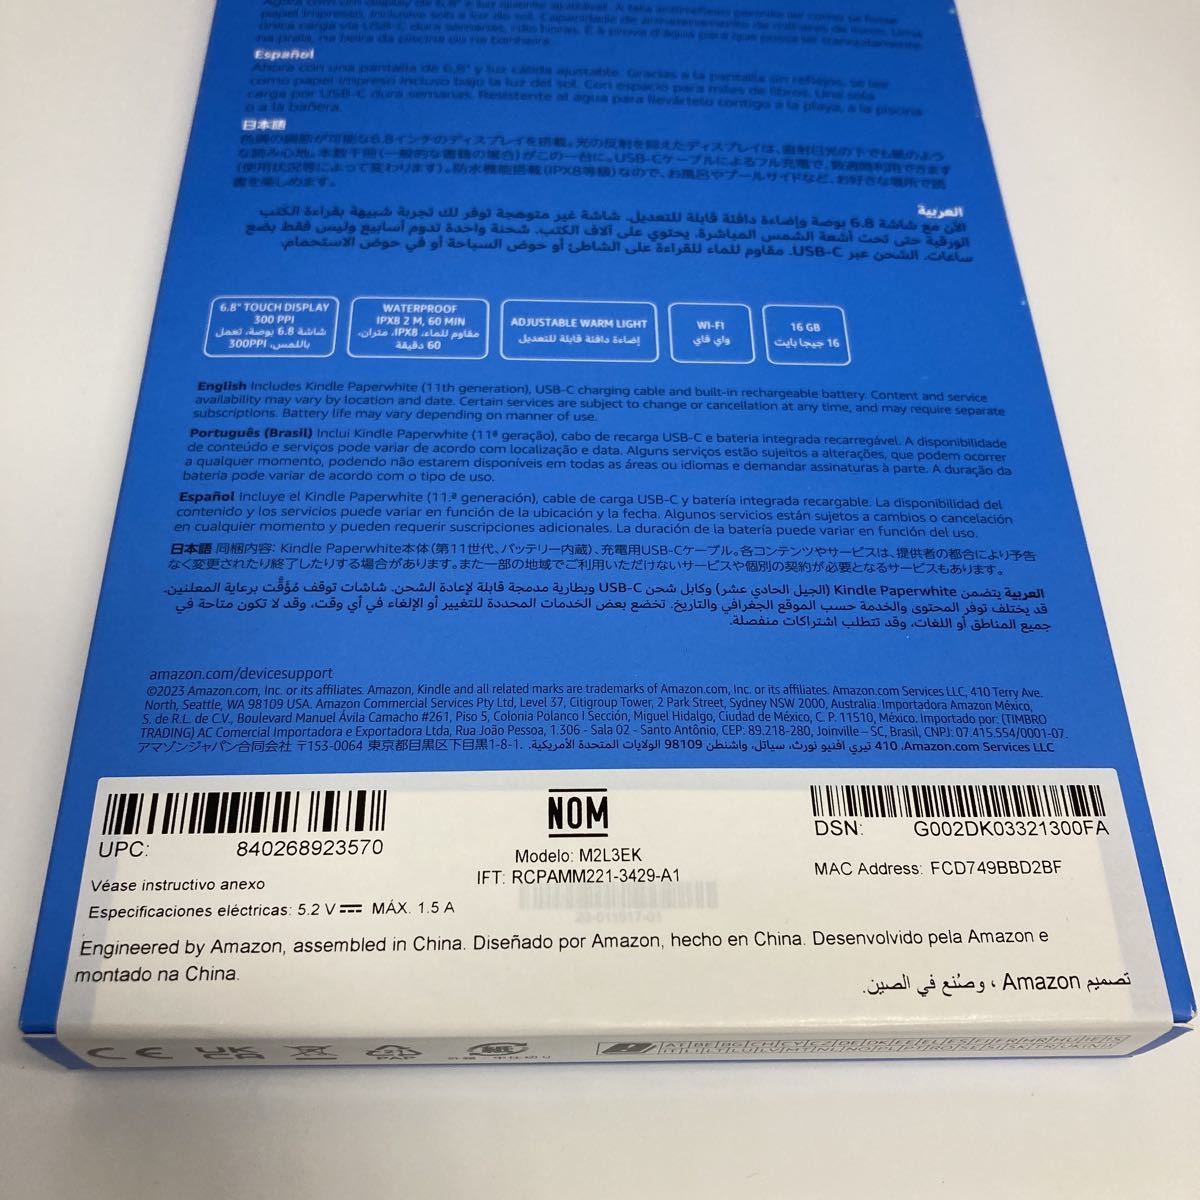 Kindle Paperwhite GB 6 8インチディスプレイ 色調調節ライト搭載